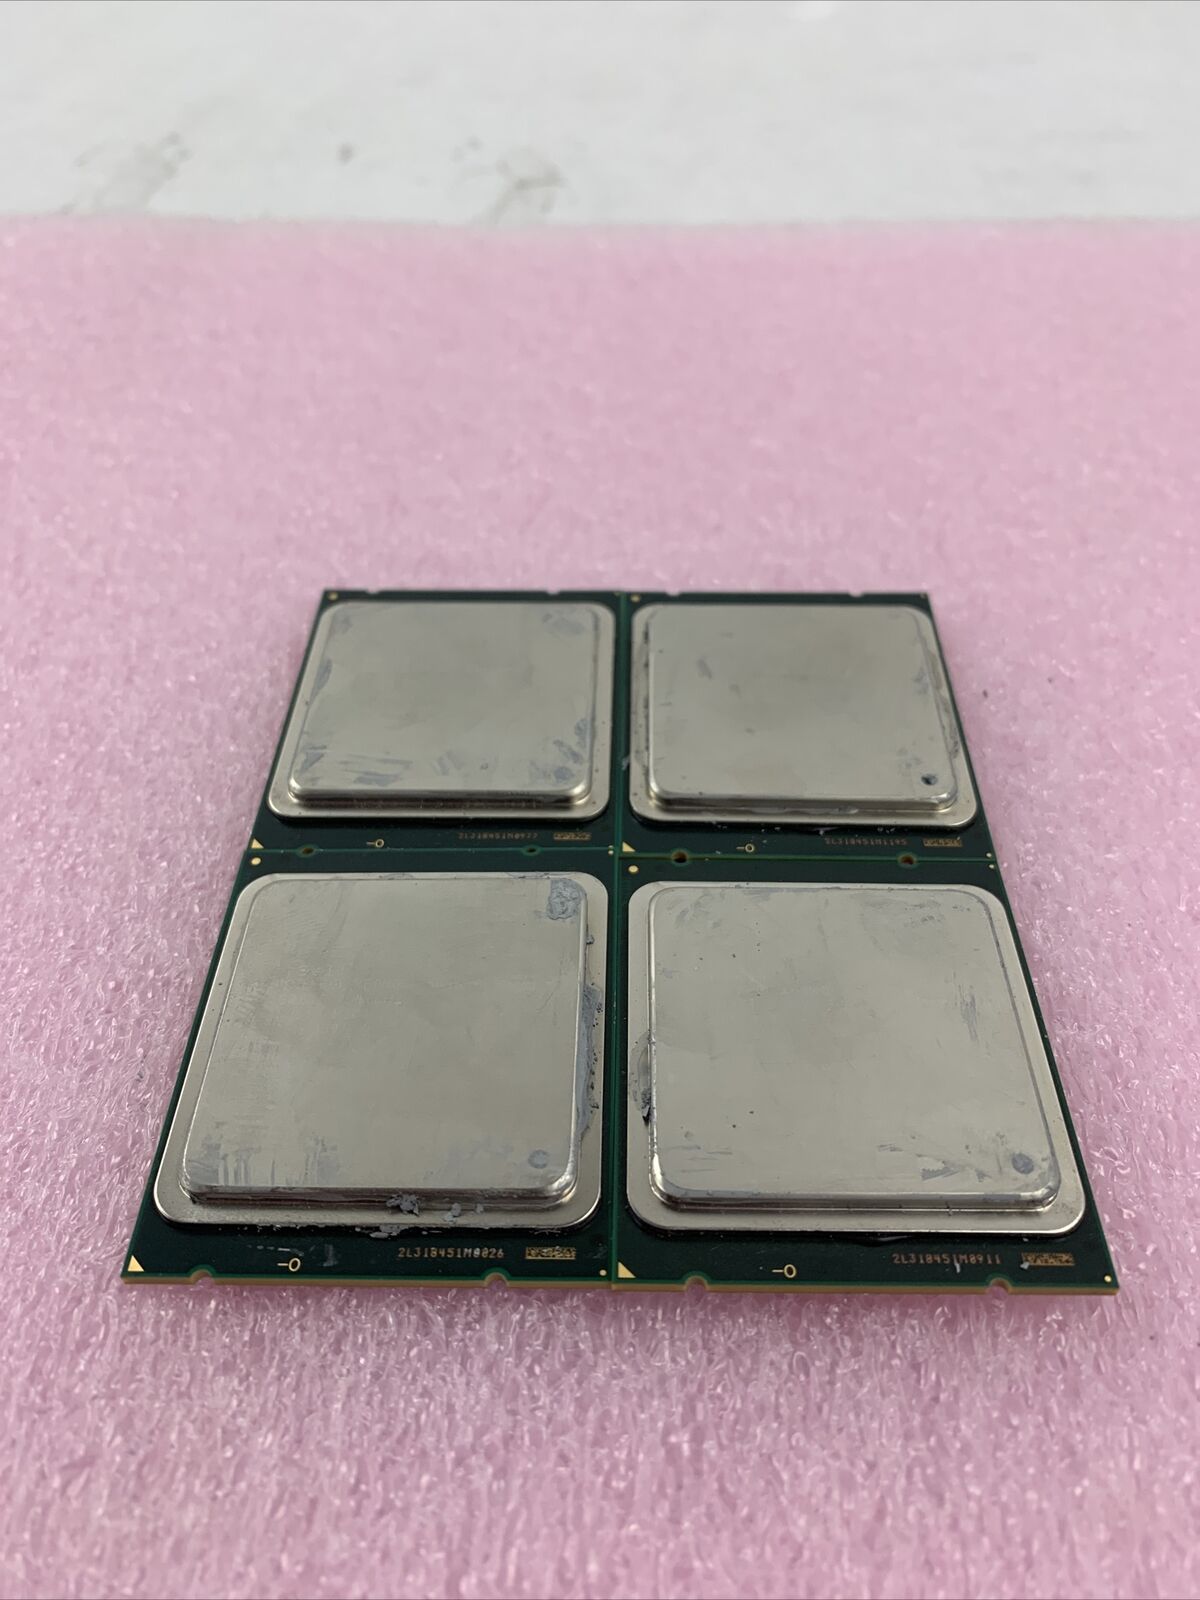 Lot of 4 Intel Xeon E5-4640 2.4GHz 20MB 8GT/s SR0QT LGA2011